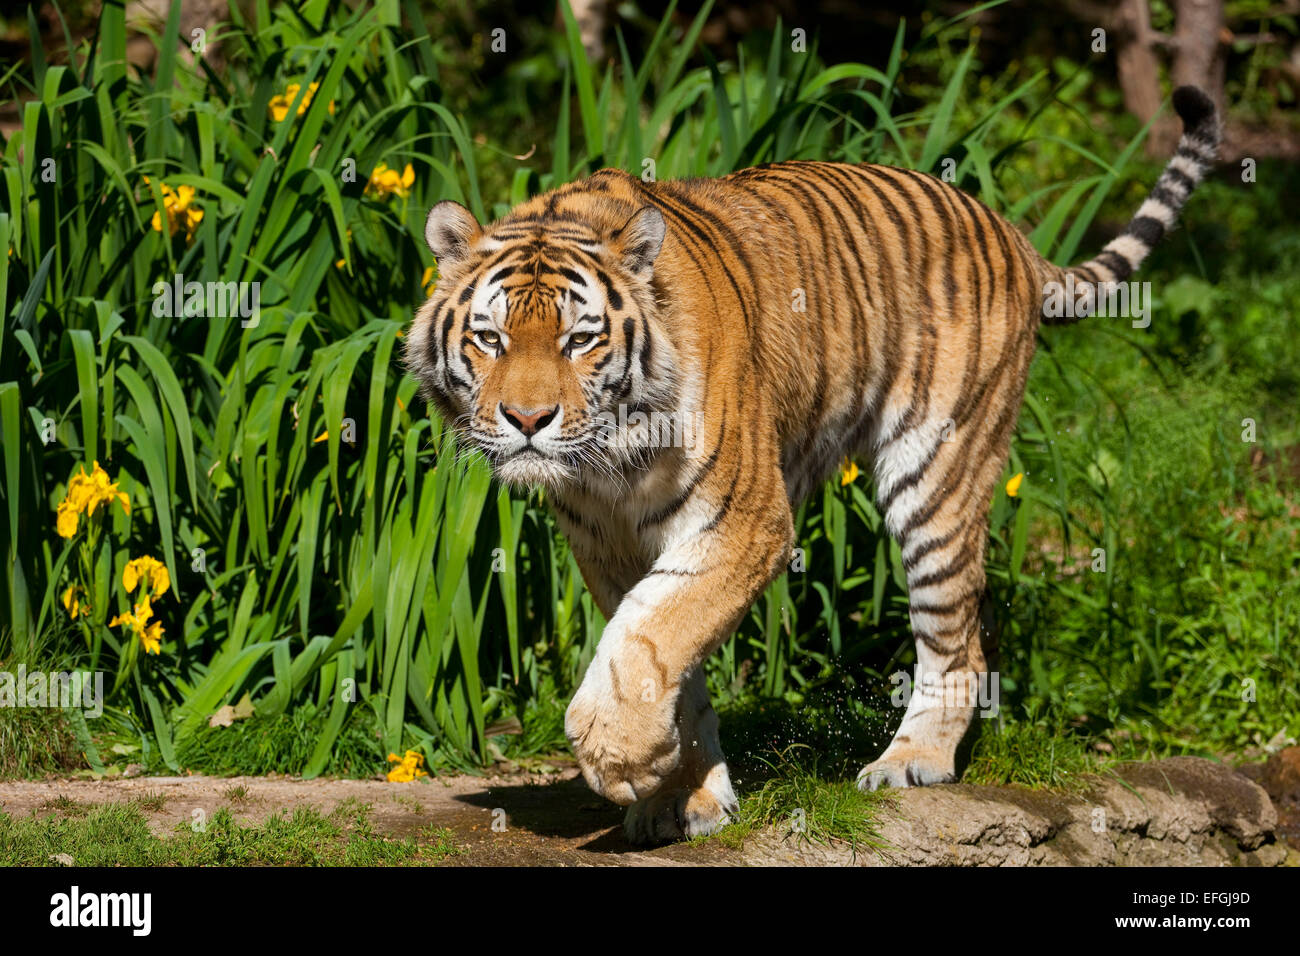 Tigre siberiano o de Amur el tigre (Panthera tigris altaica), cautiva, Sajonia, Alemania Foto de stock